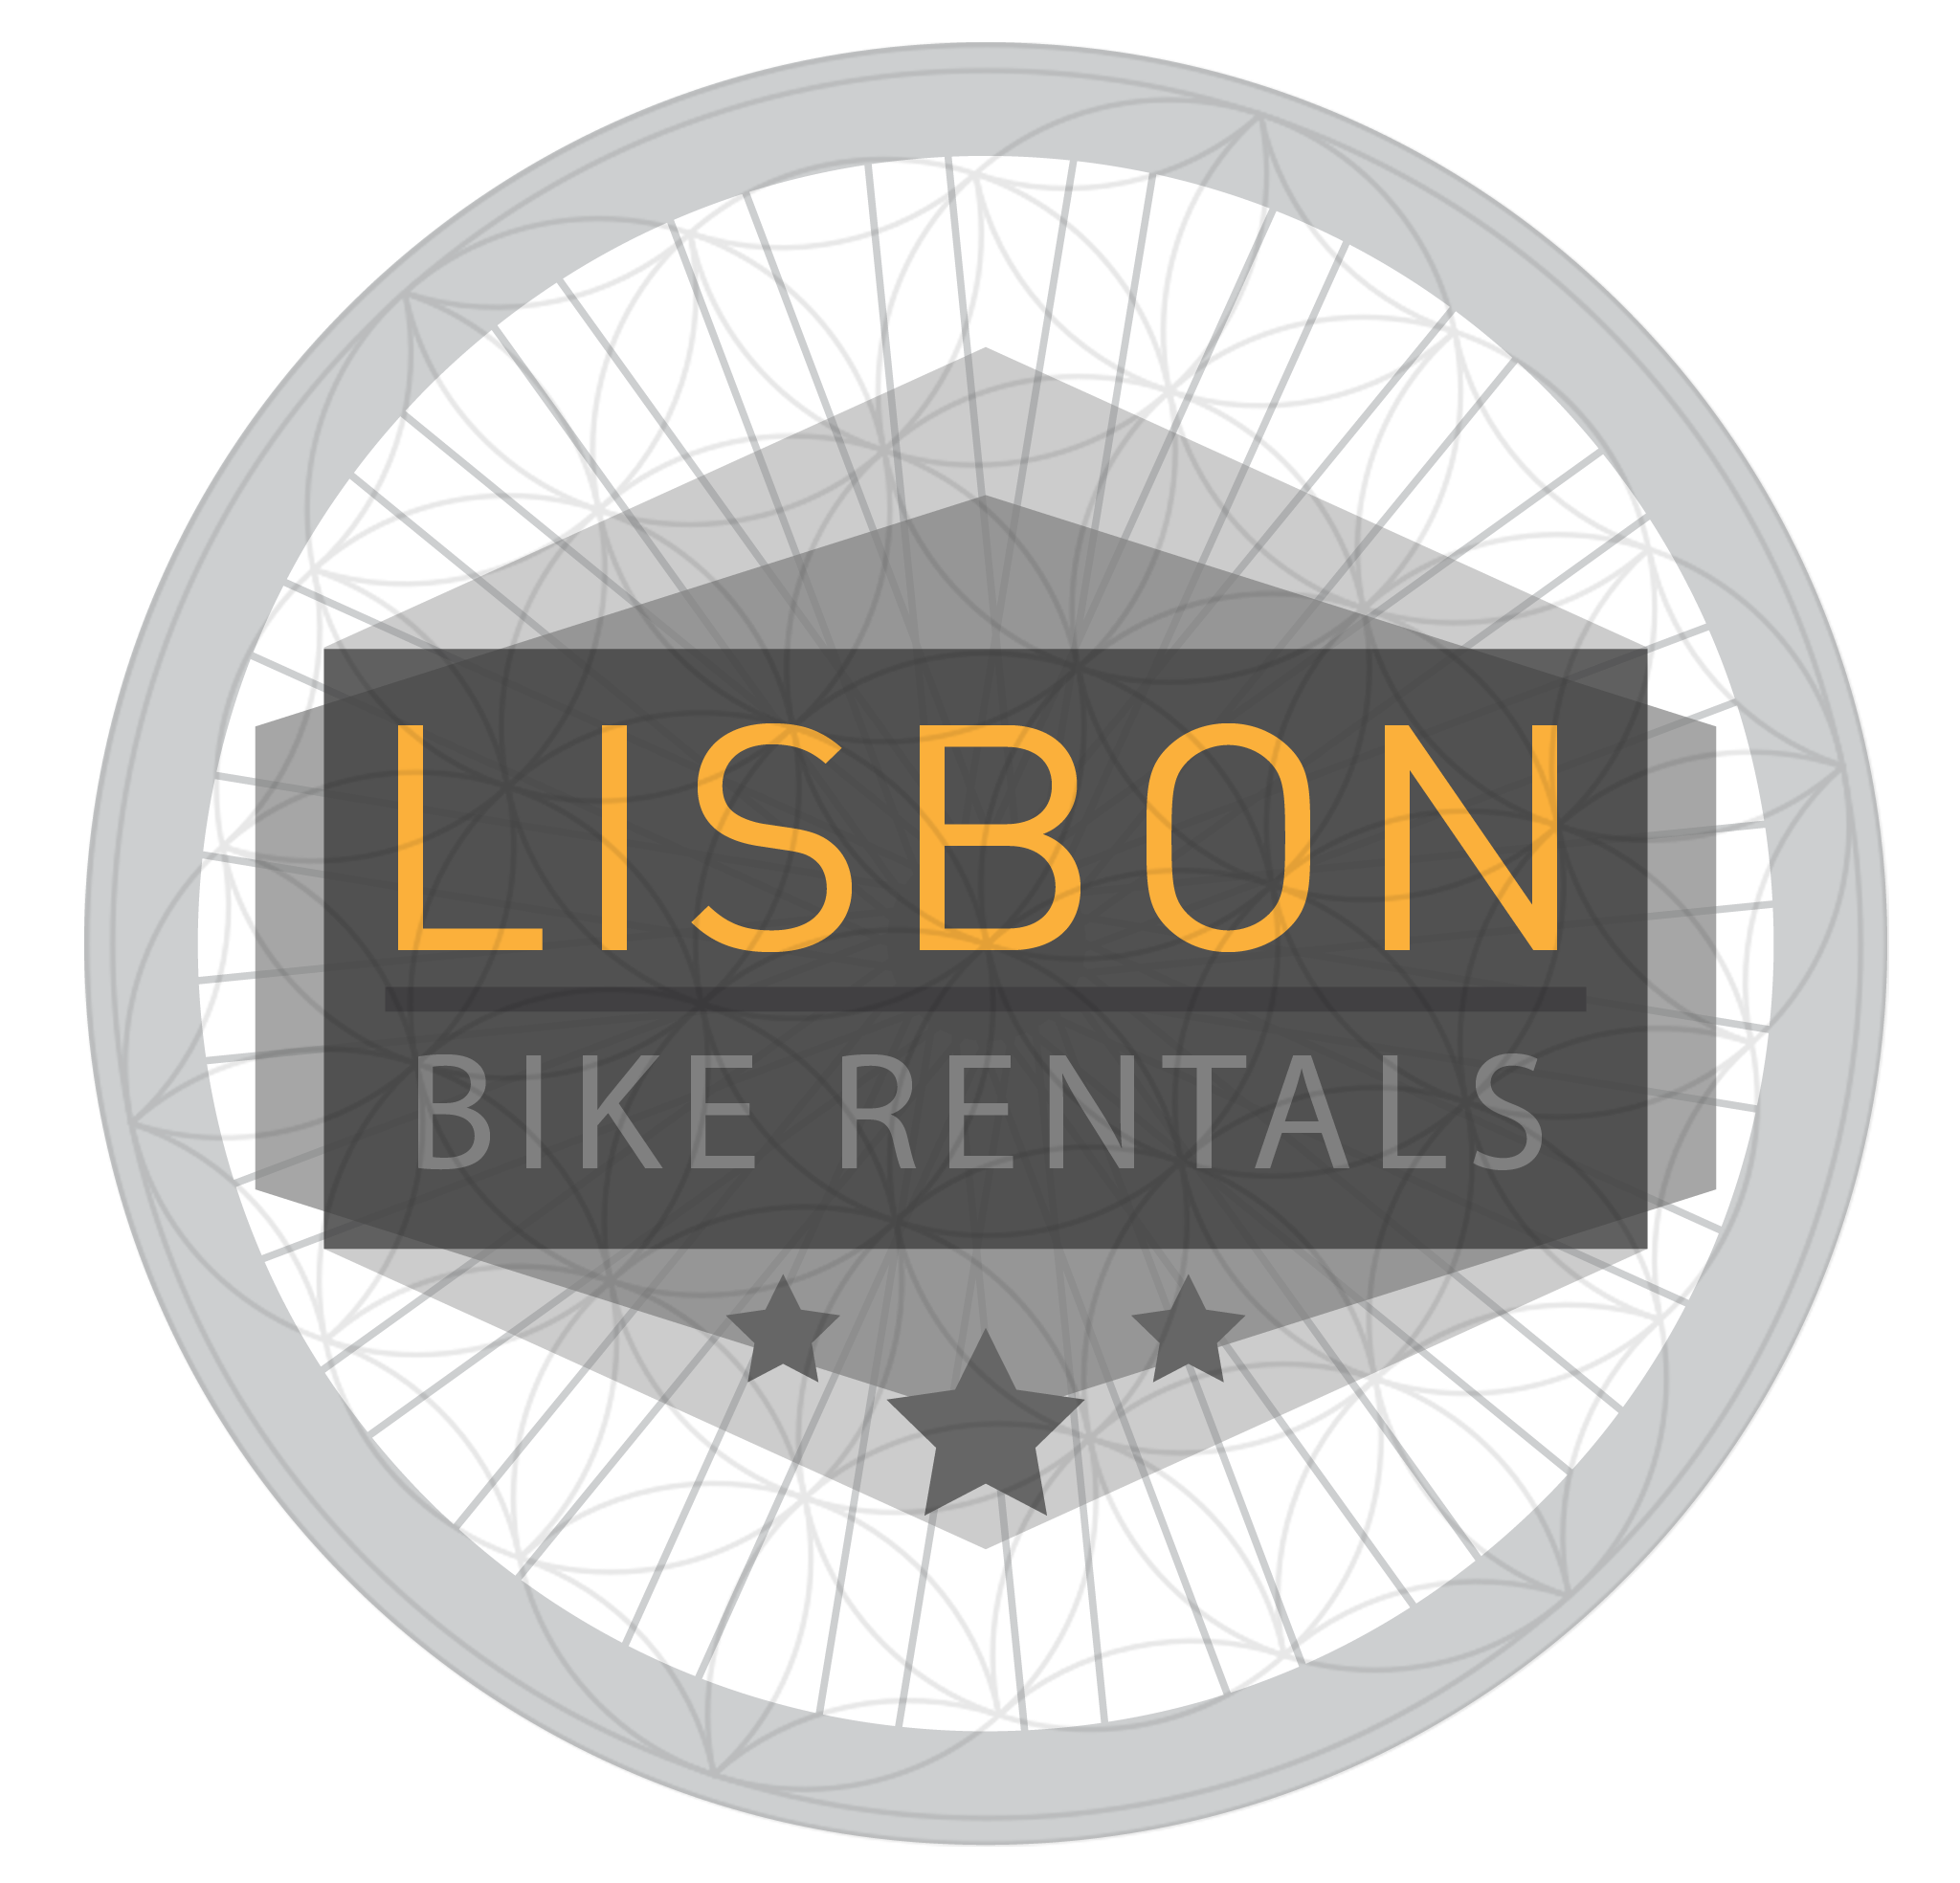 Lisbon Bike Rentals ®